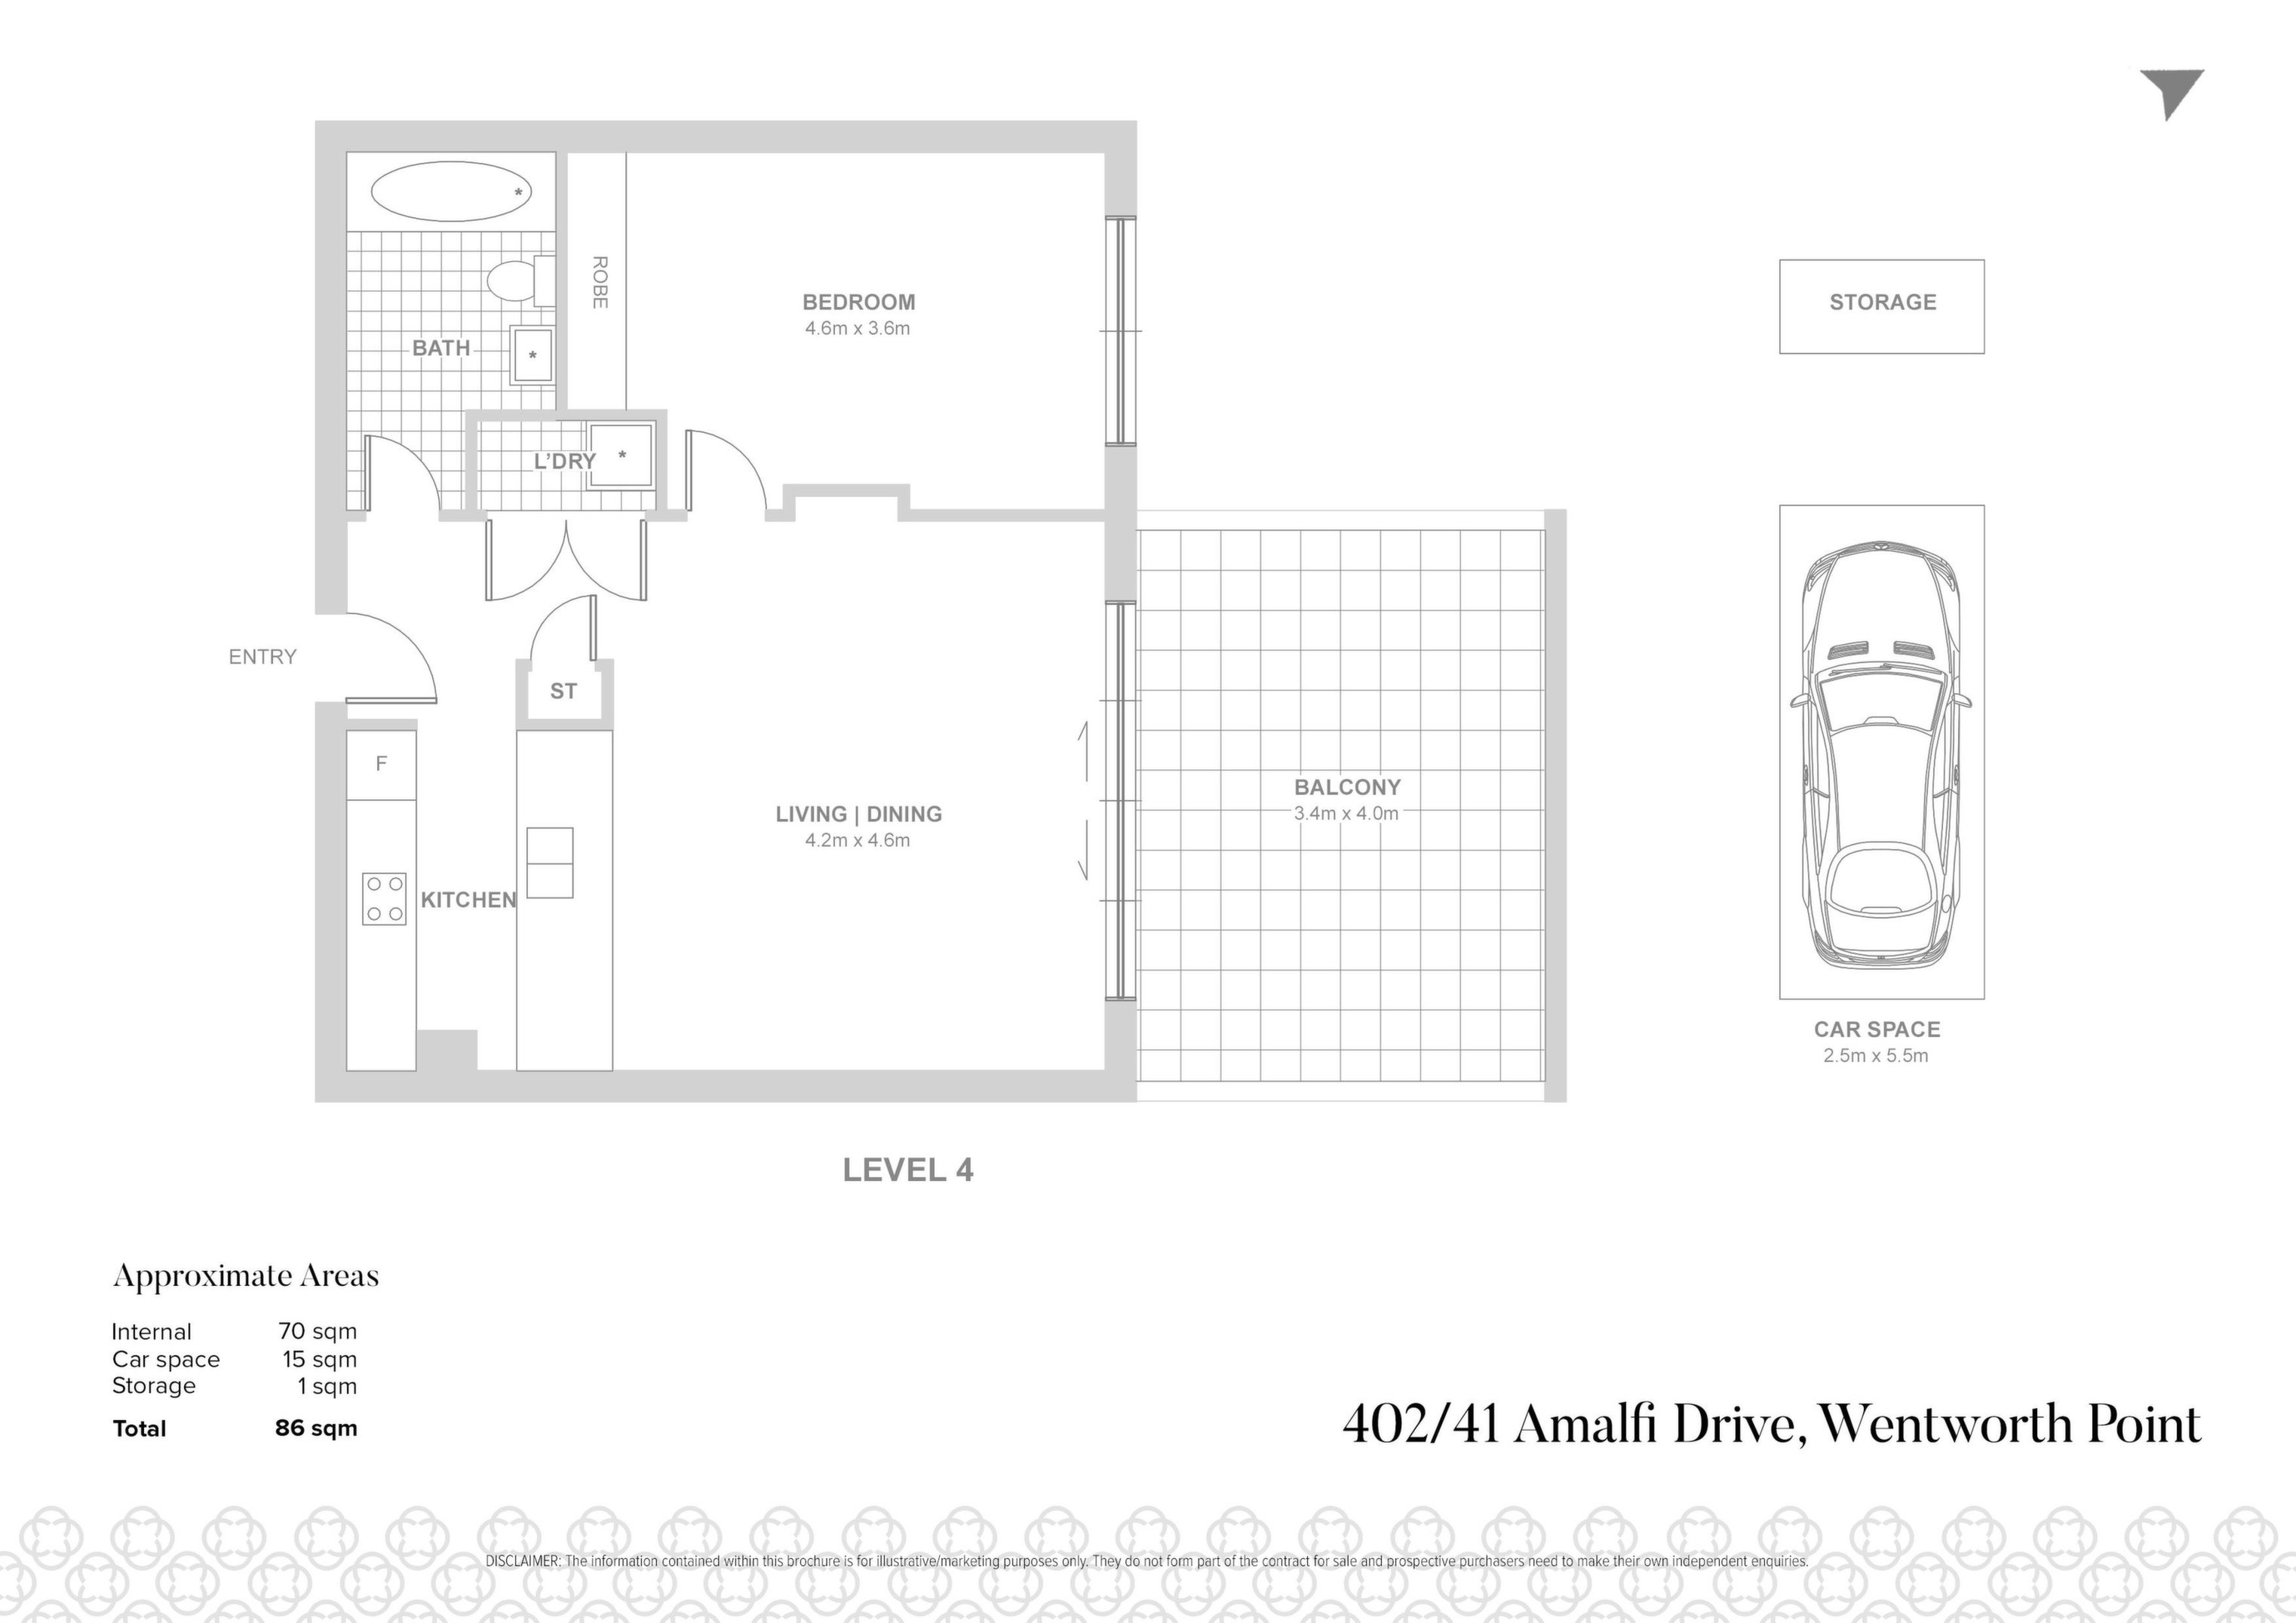 402/41 Amalfi Drive, Wentworth Point Sold by Chidiac Realty - floorplan